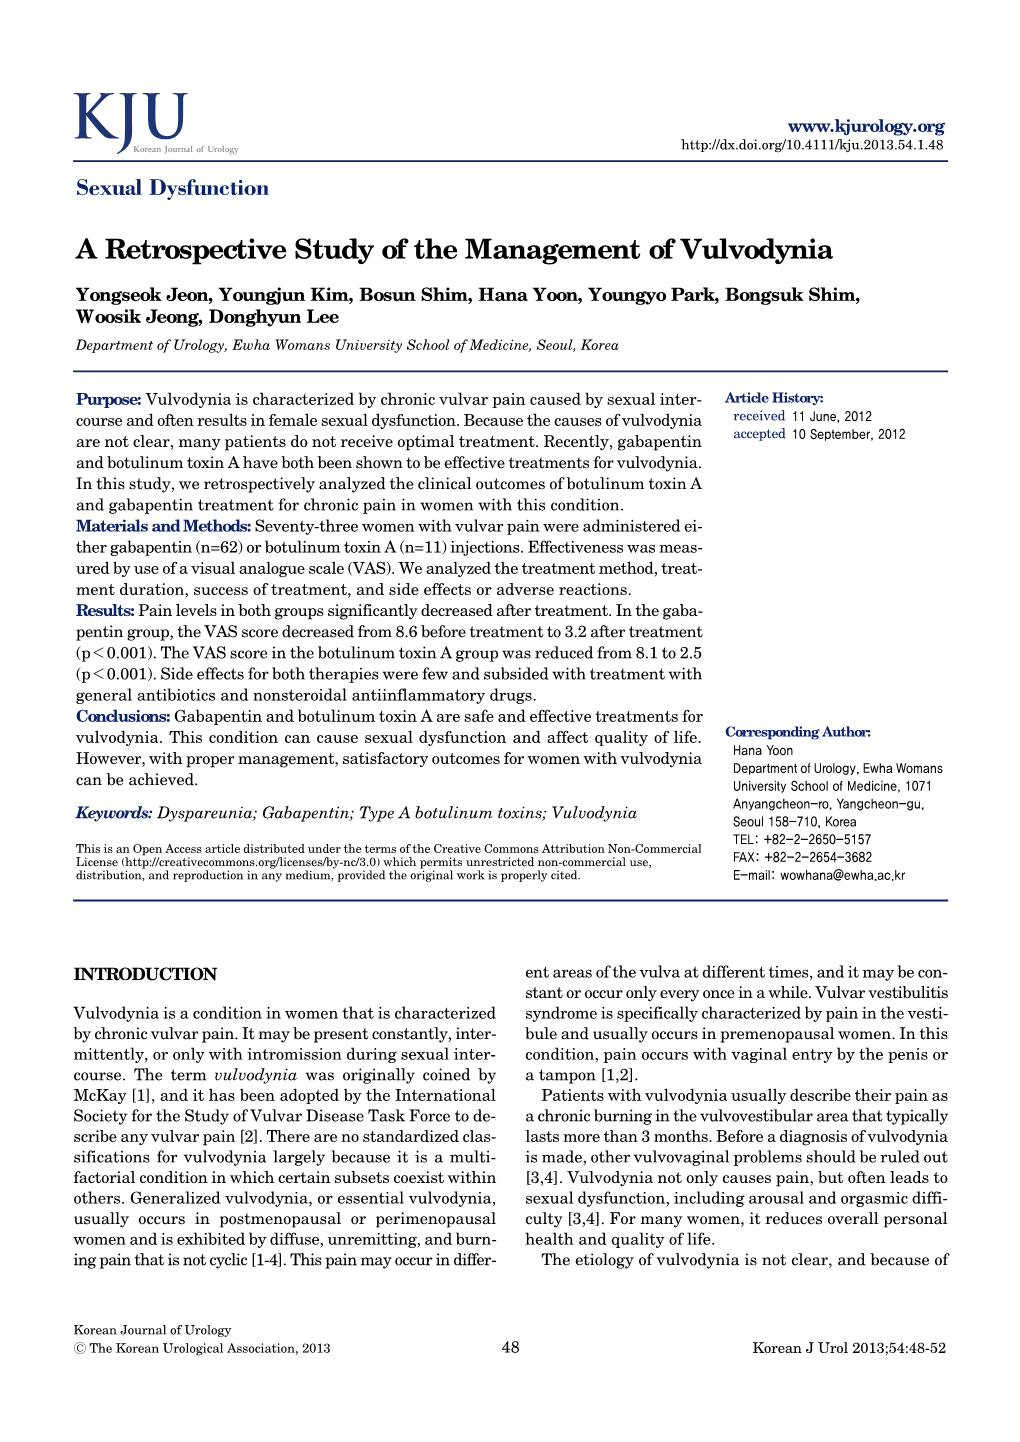 A Retrospective Study of the Management of Vulvodynia